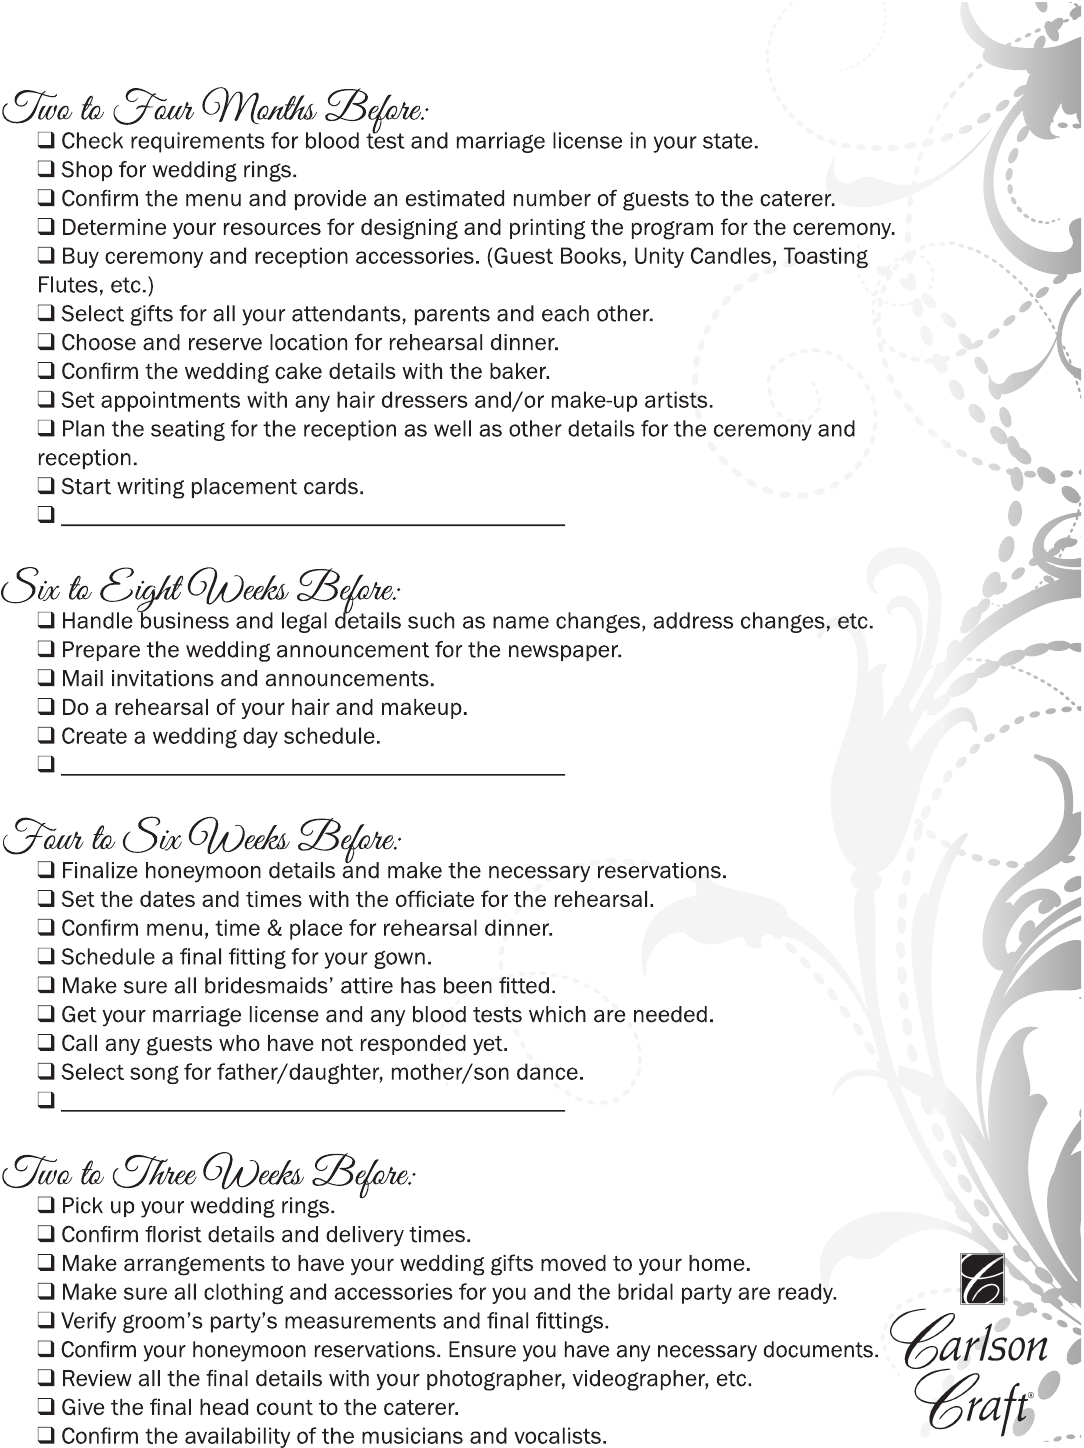 wedding-checklist-timeline-edit-fill-sign-online-handypdf